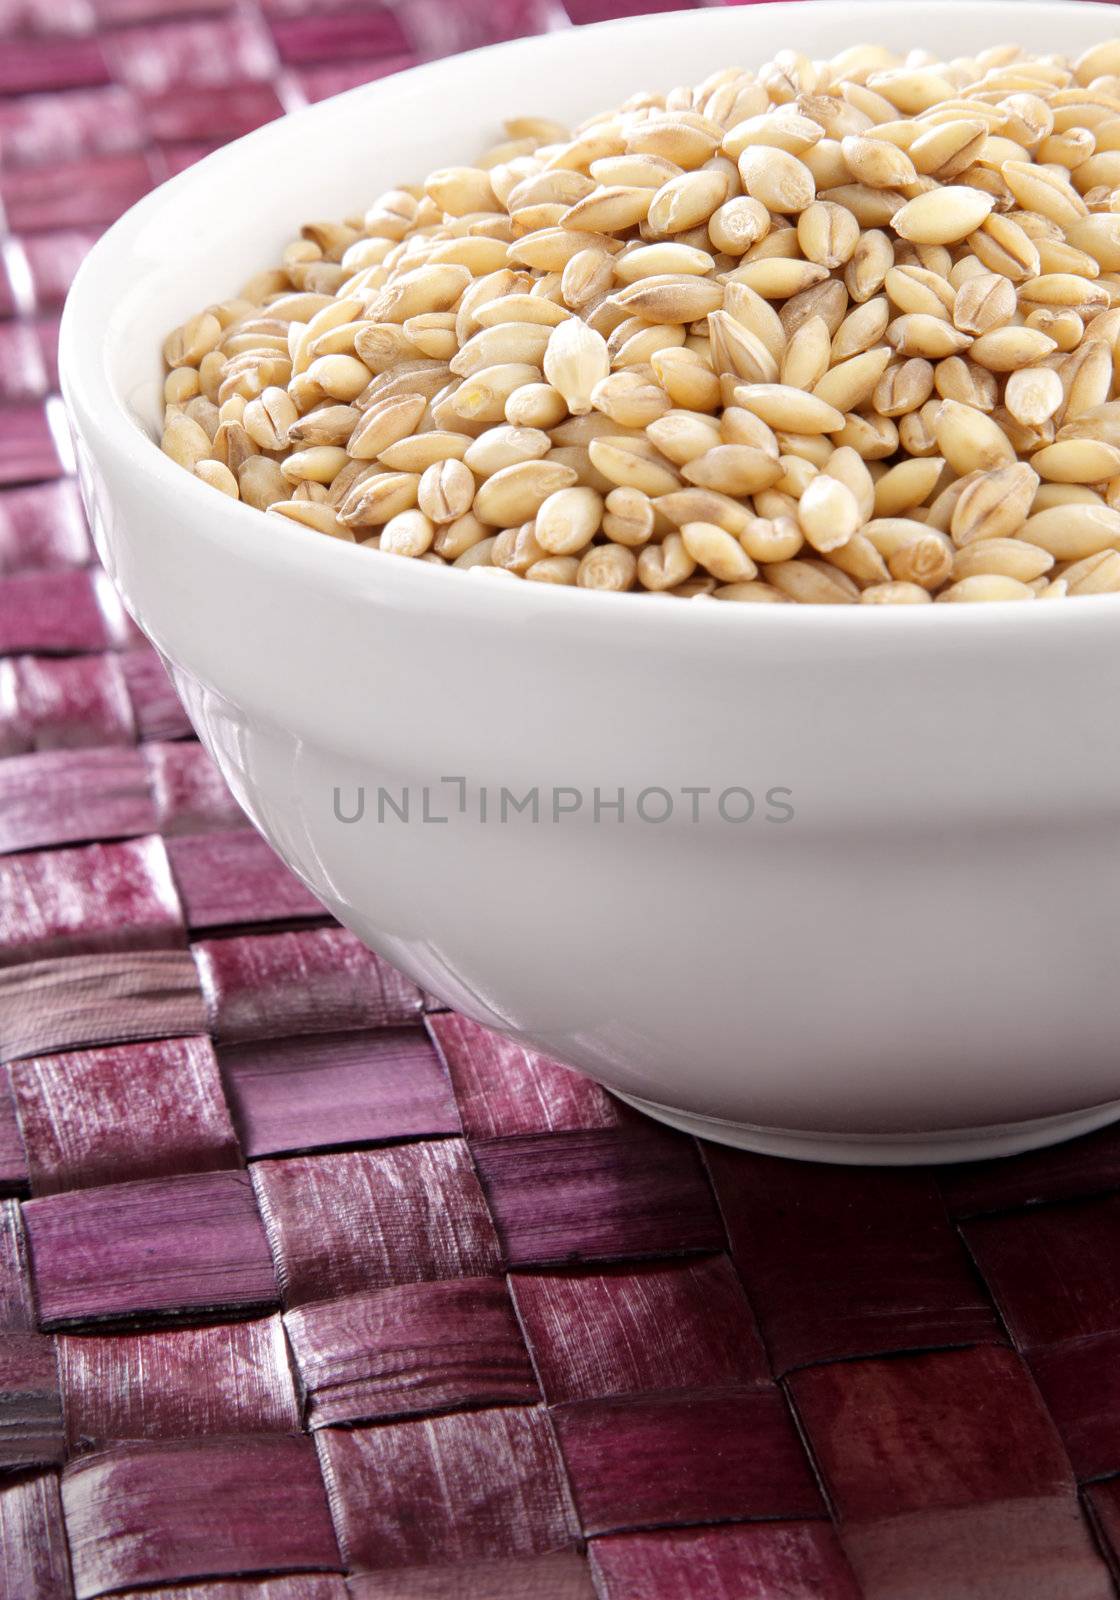 A bowl of organic barley on purple surface.